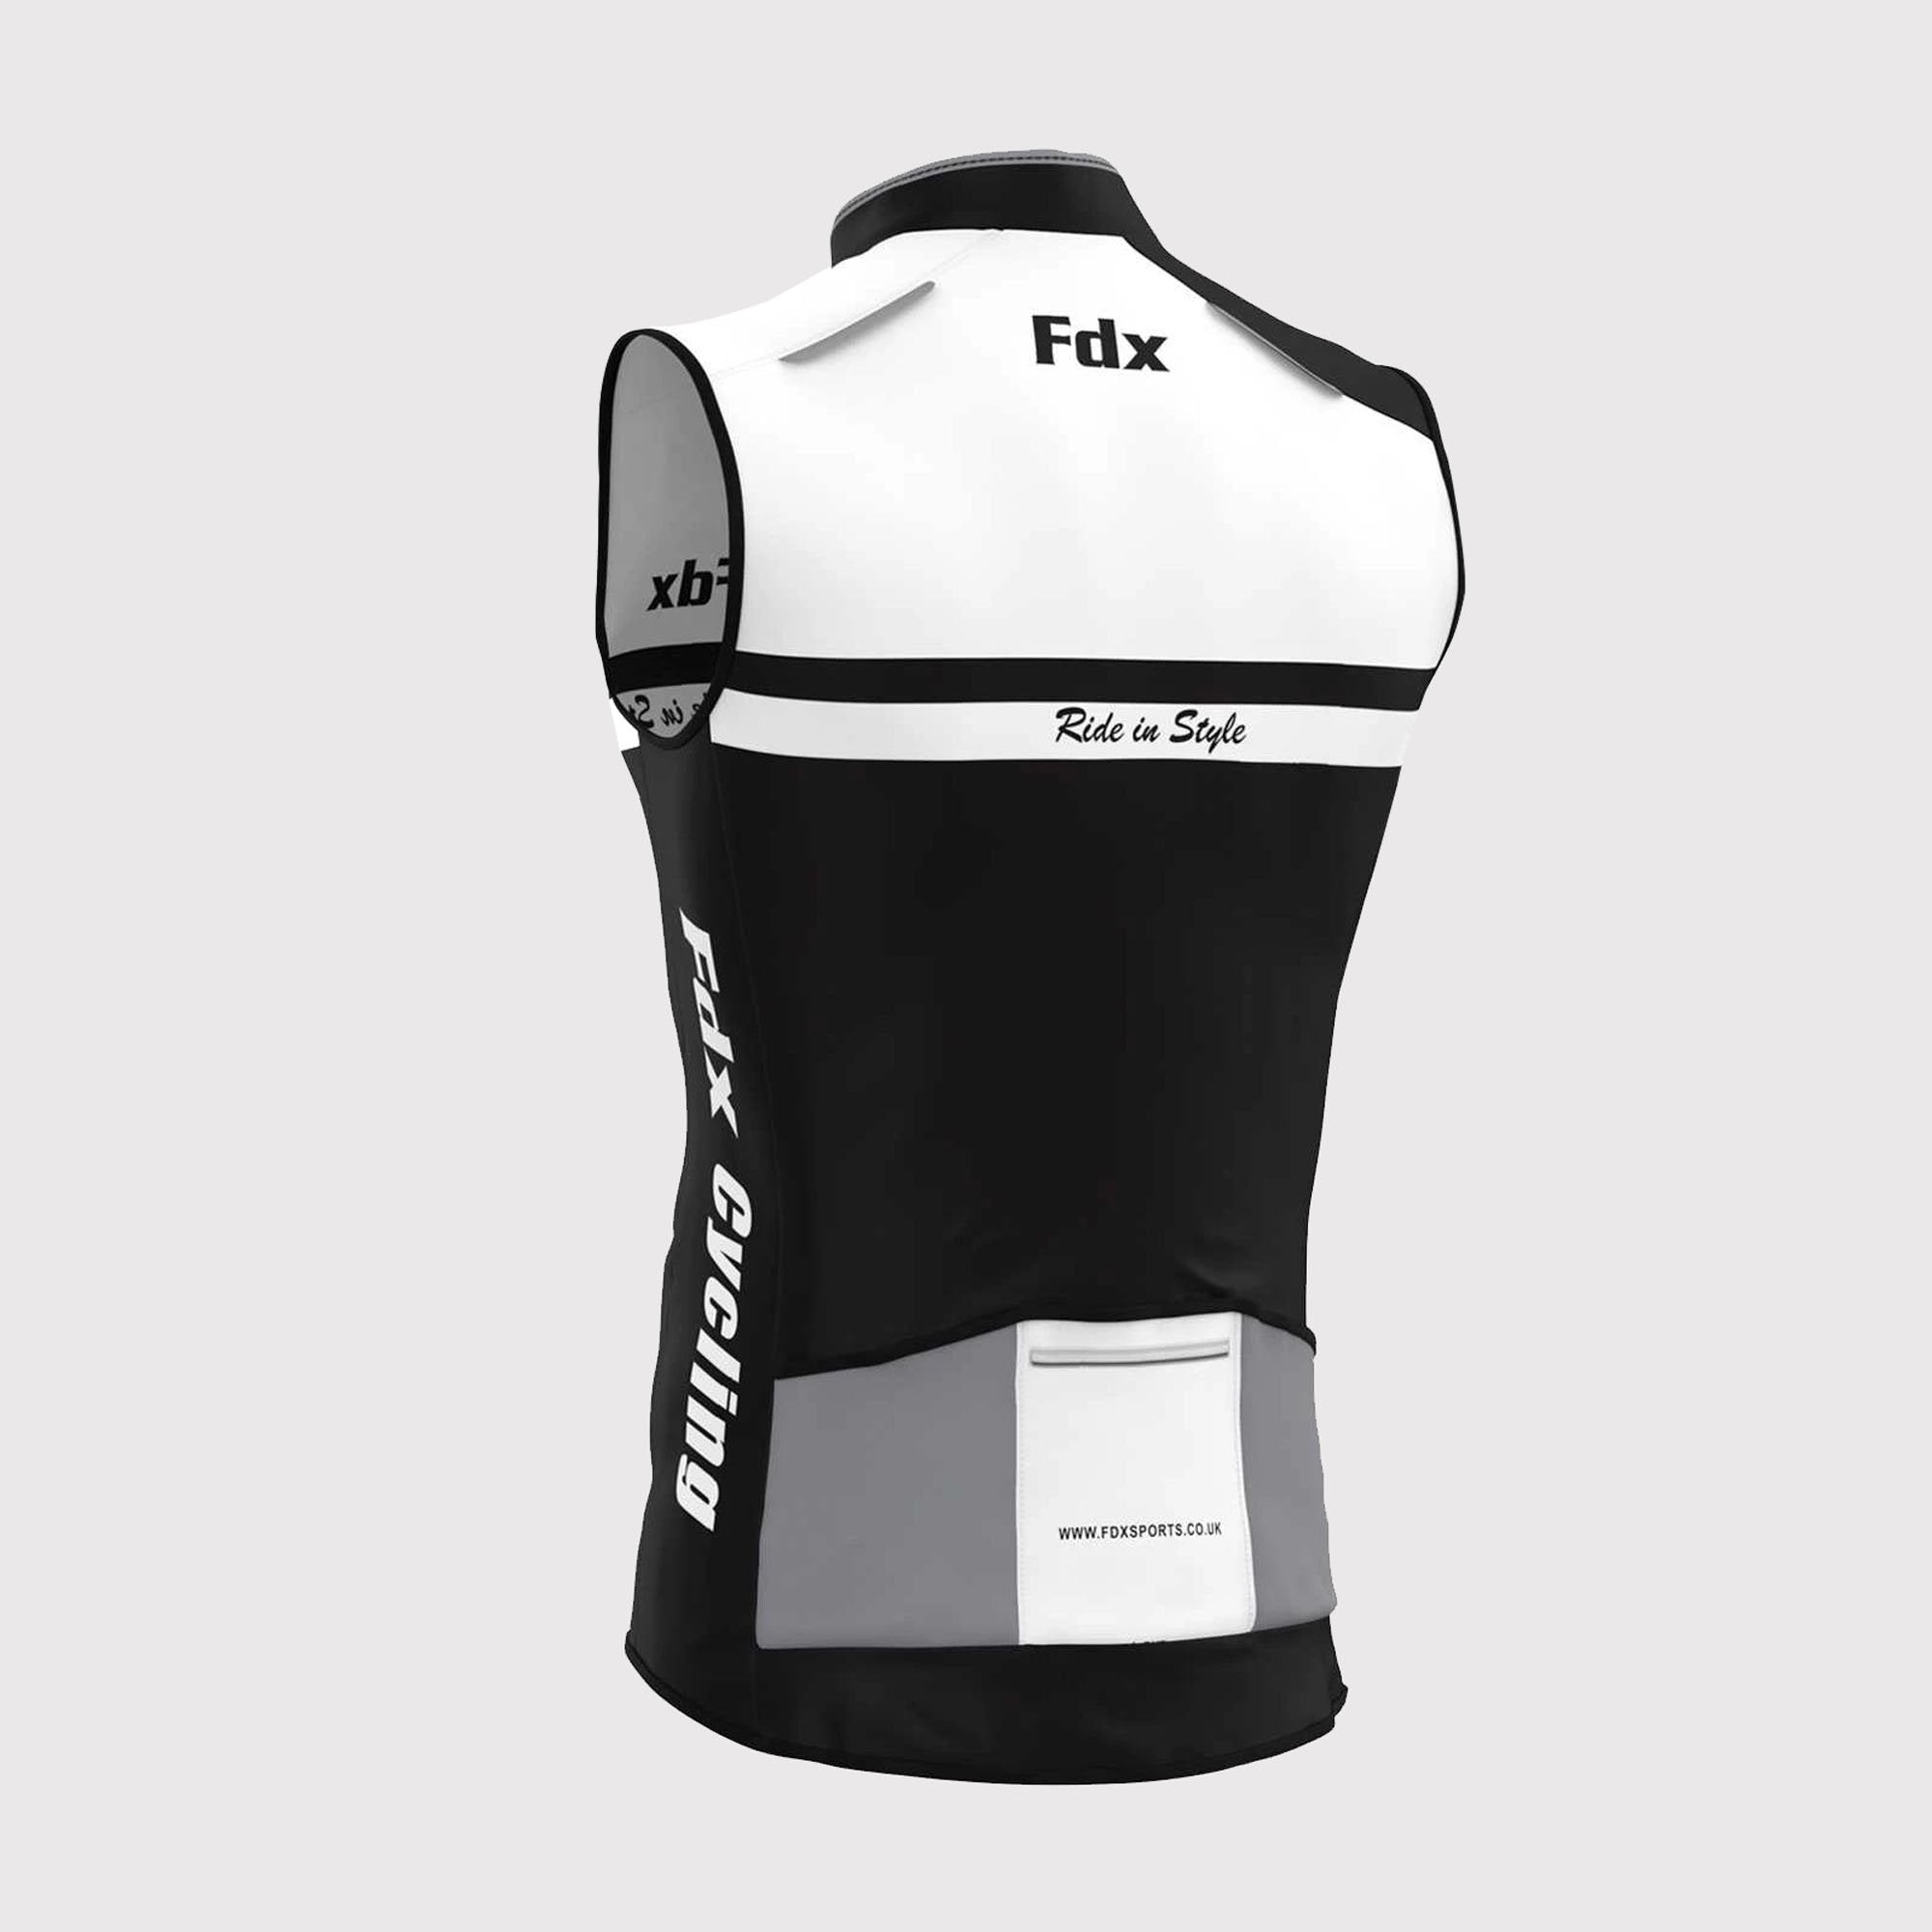 Fdx Men's Black & White Cycling Gilet Sleeveless Vest for Winter Clothing Hi-Viz Reflectors, Lightweight, Windproof, Waterproof & Pockets - Adrenaline